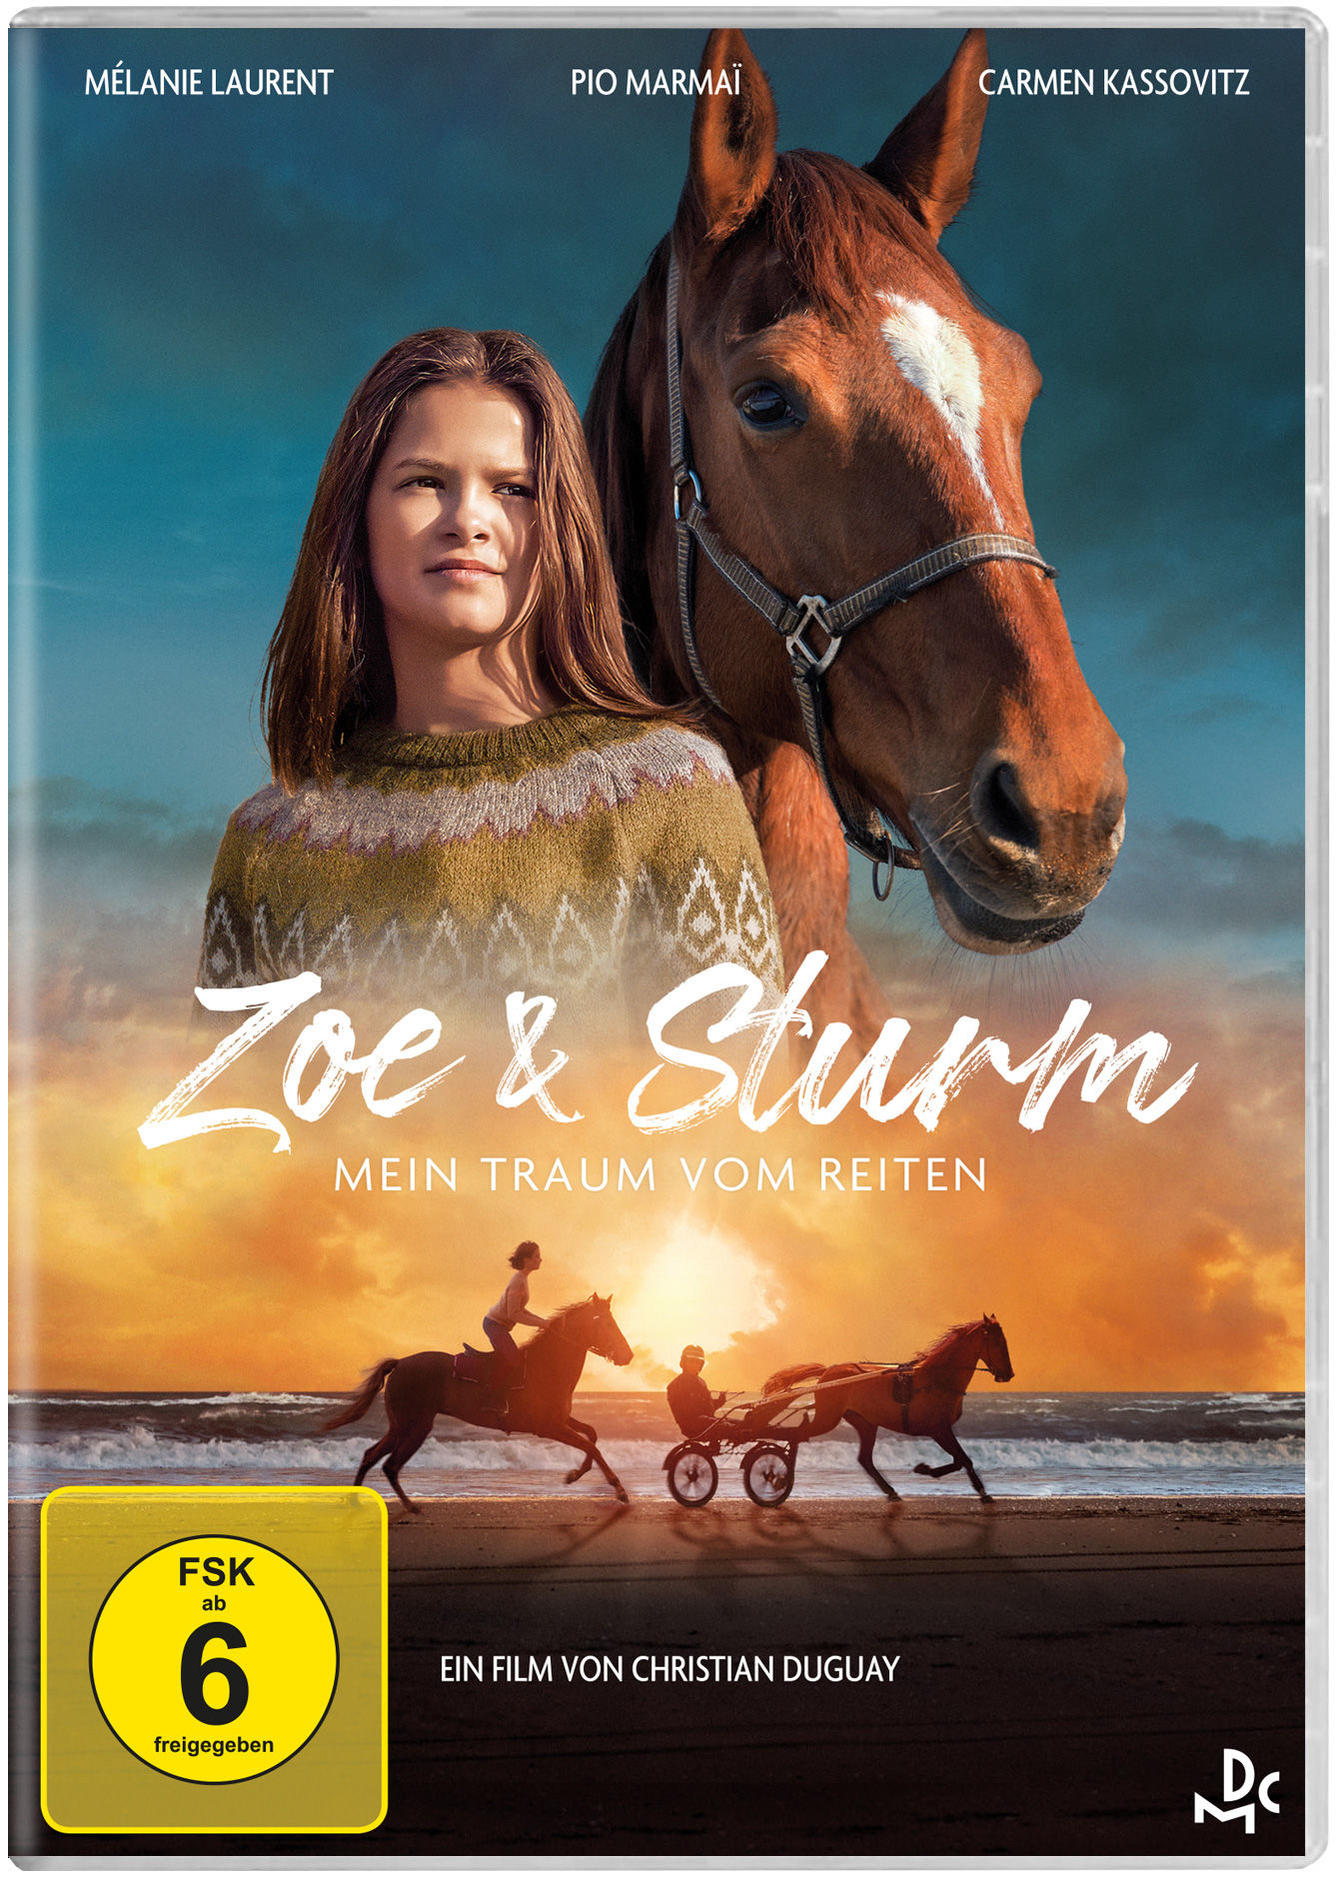 Zoe & DVD Sturm